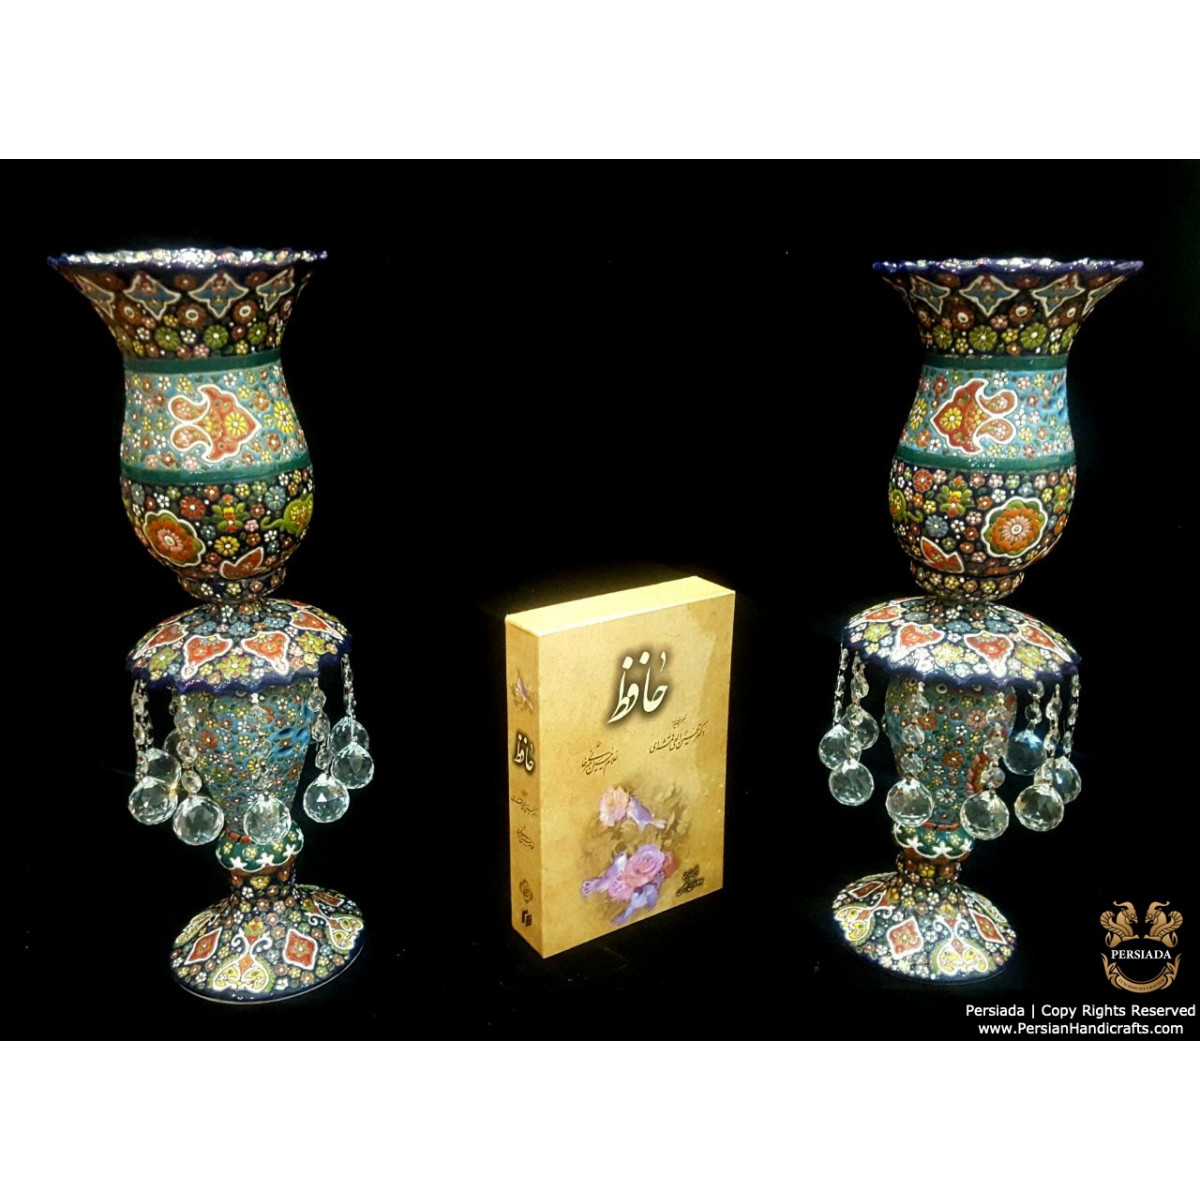 Taper Candleholder Persian Enamel on Pottery | HPM517-Persian Handicrafts